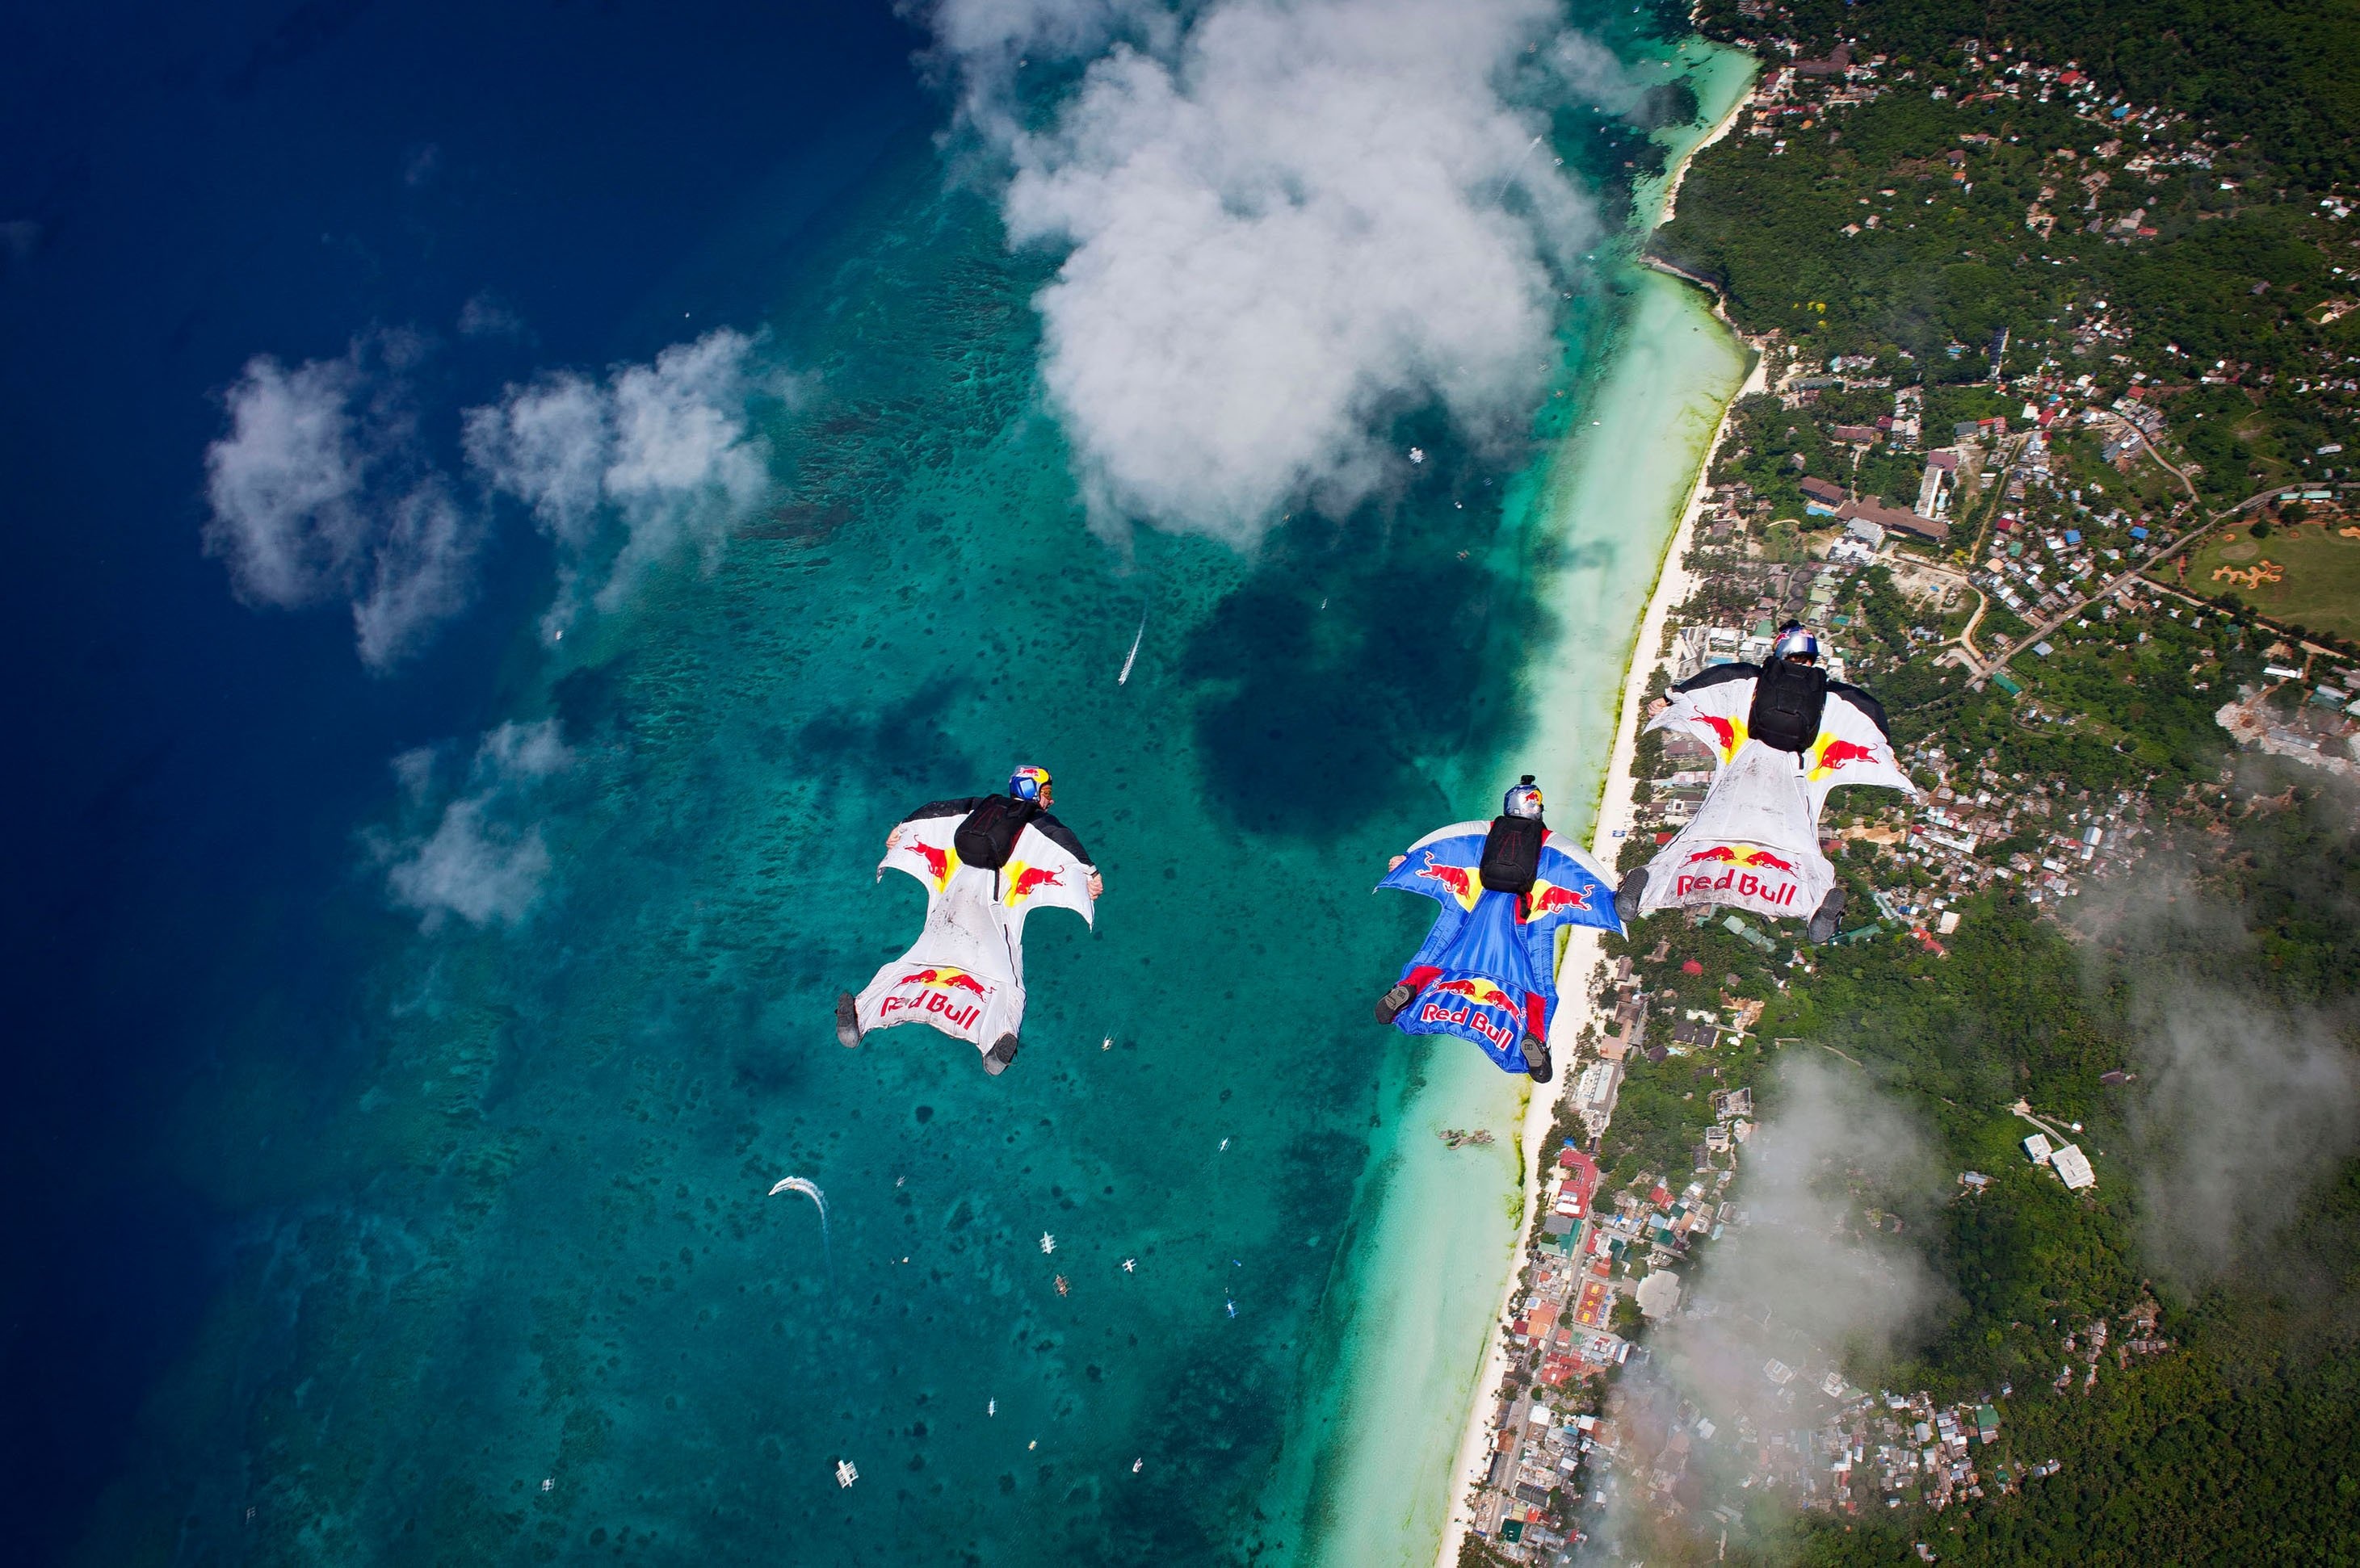 Wingsuit Flying: Extreme birdman skydiving, Red Bull wingsuit diving team. 2930x1950 HD Background.